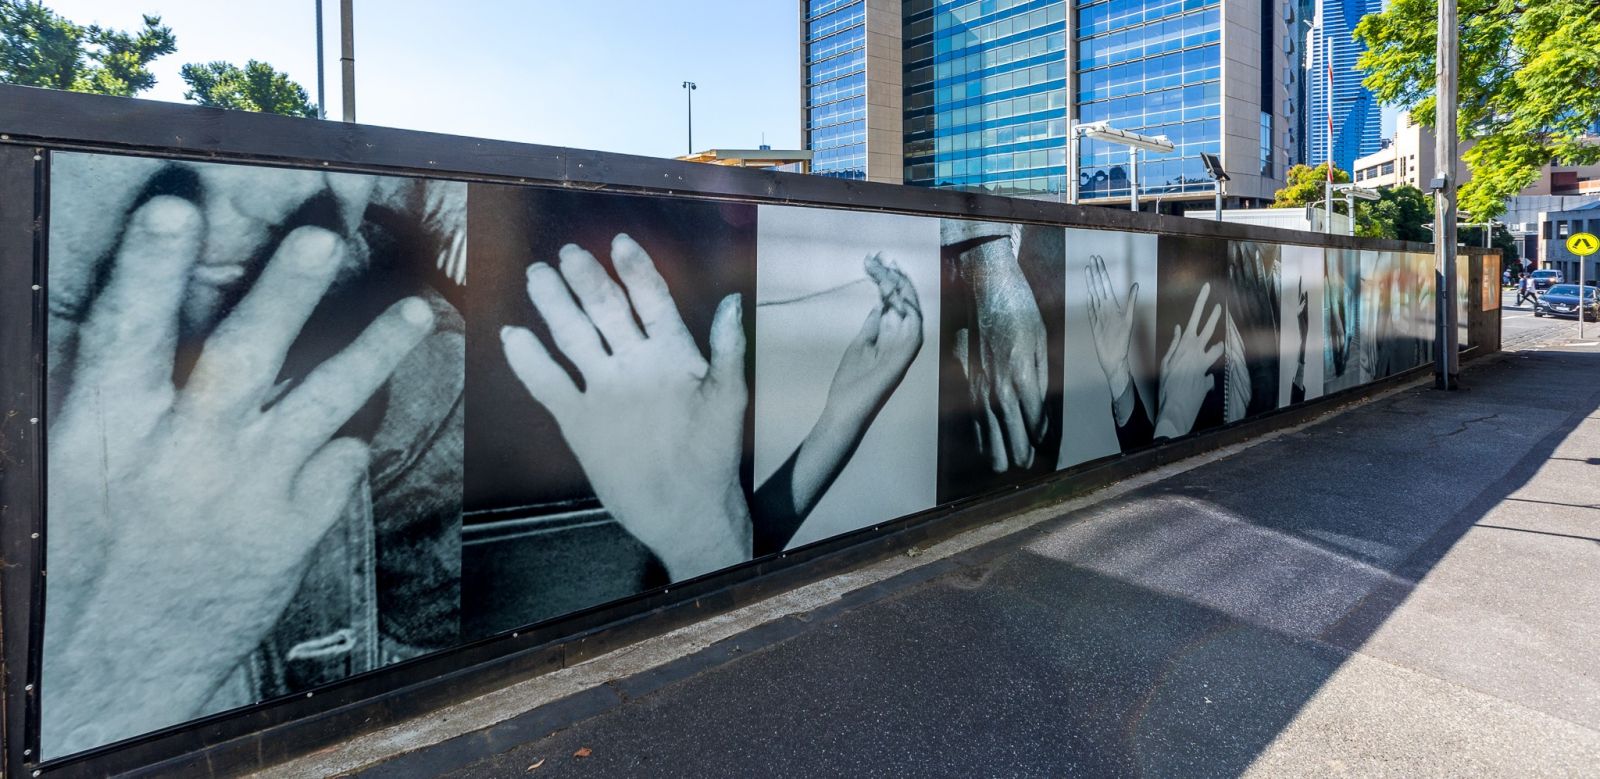 Artwork on sidewalk wall depicting hands.